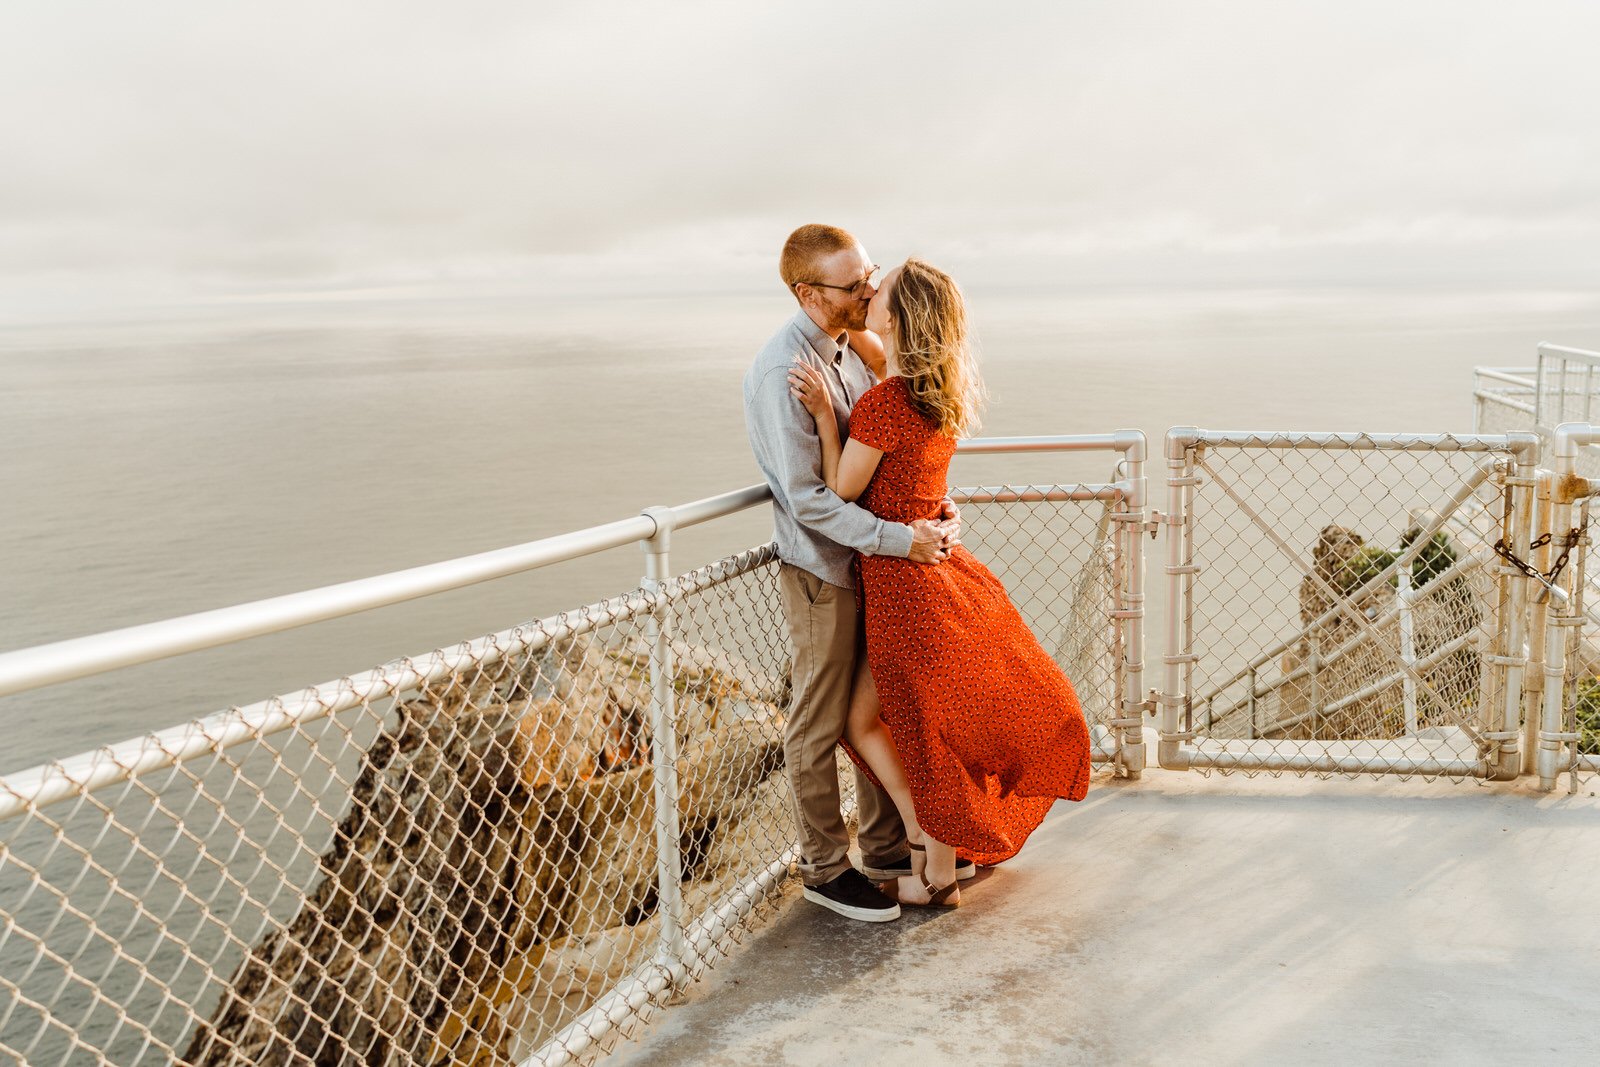 Ireland-inspired Point Reyes engagement shoot | Windy, romantic, adventurous photos by elopement expert Kept Record | www.keptrecord.com